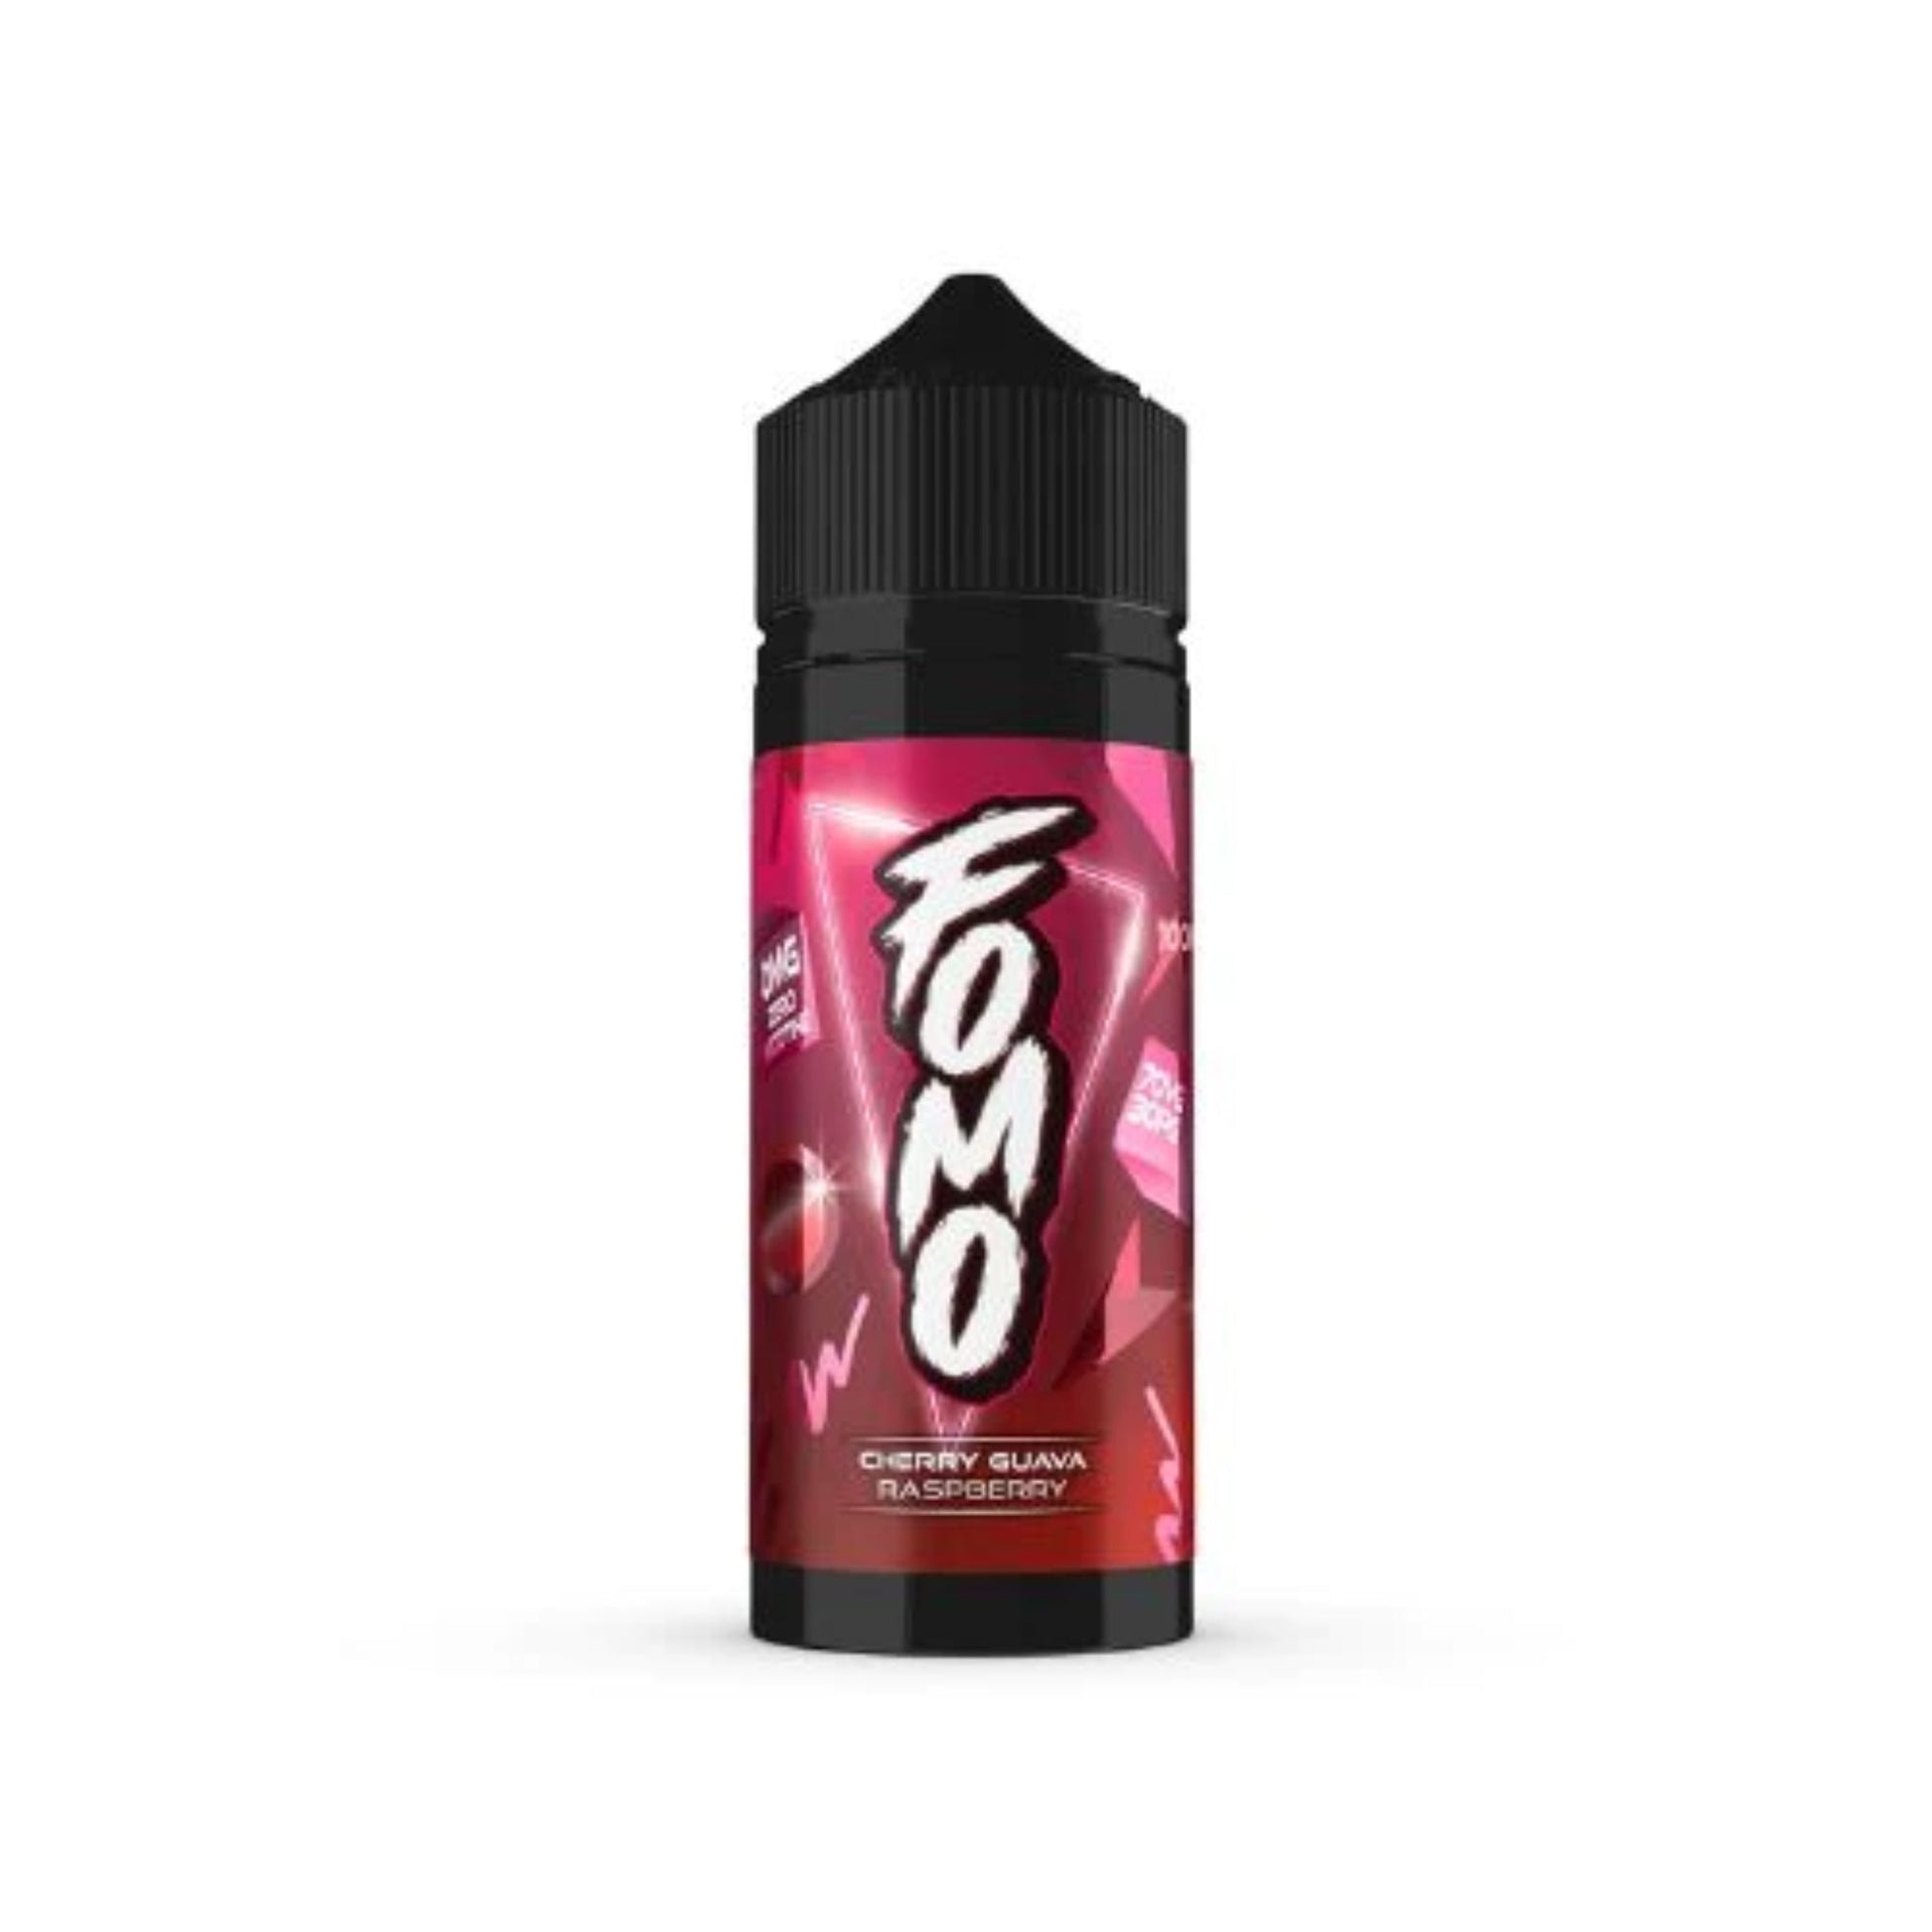 Fomo | Cherry Guava Raspberry | 100ml bottle